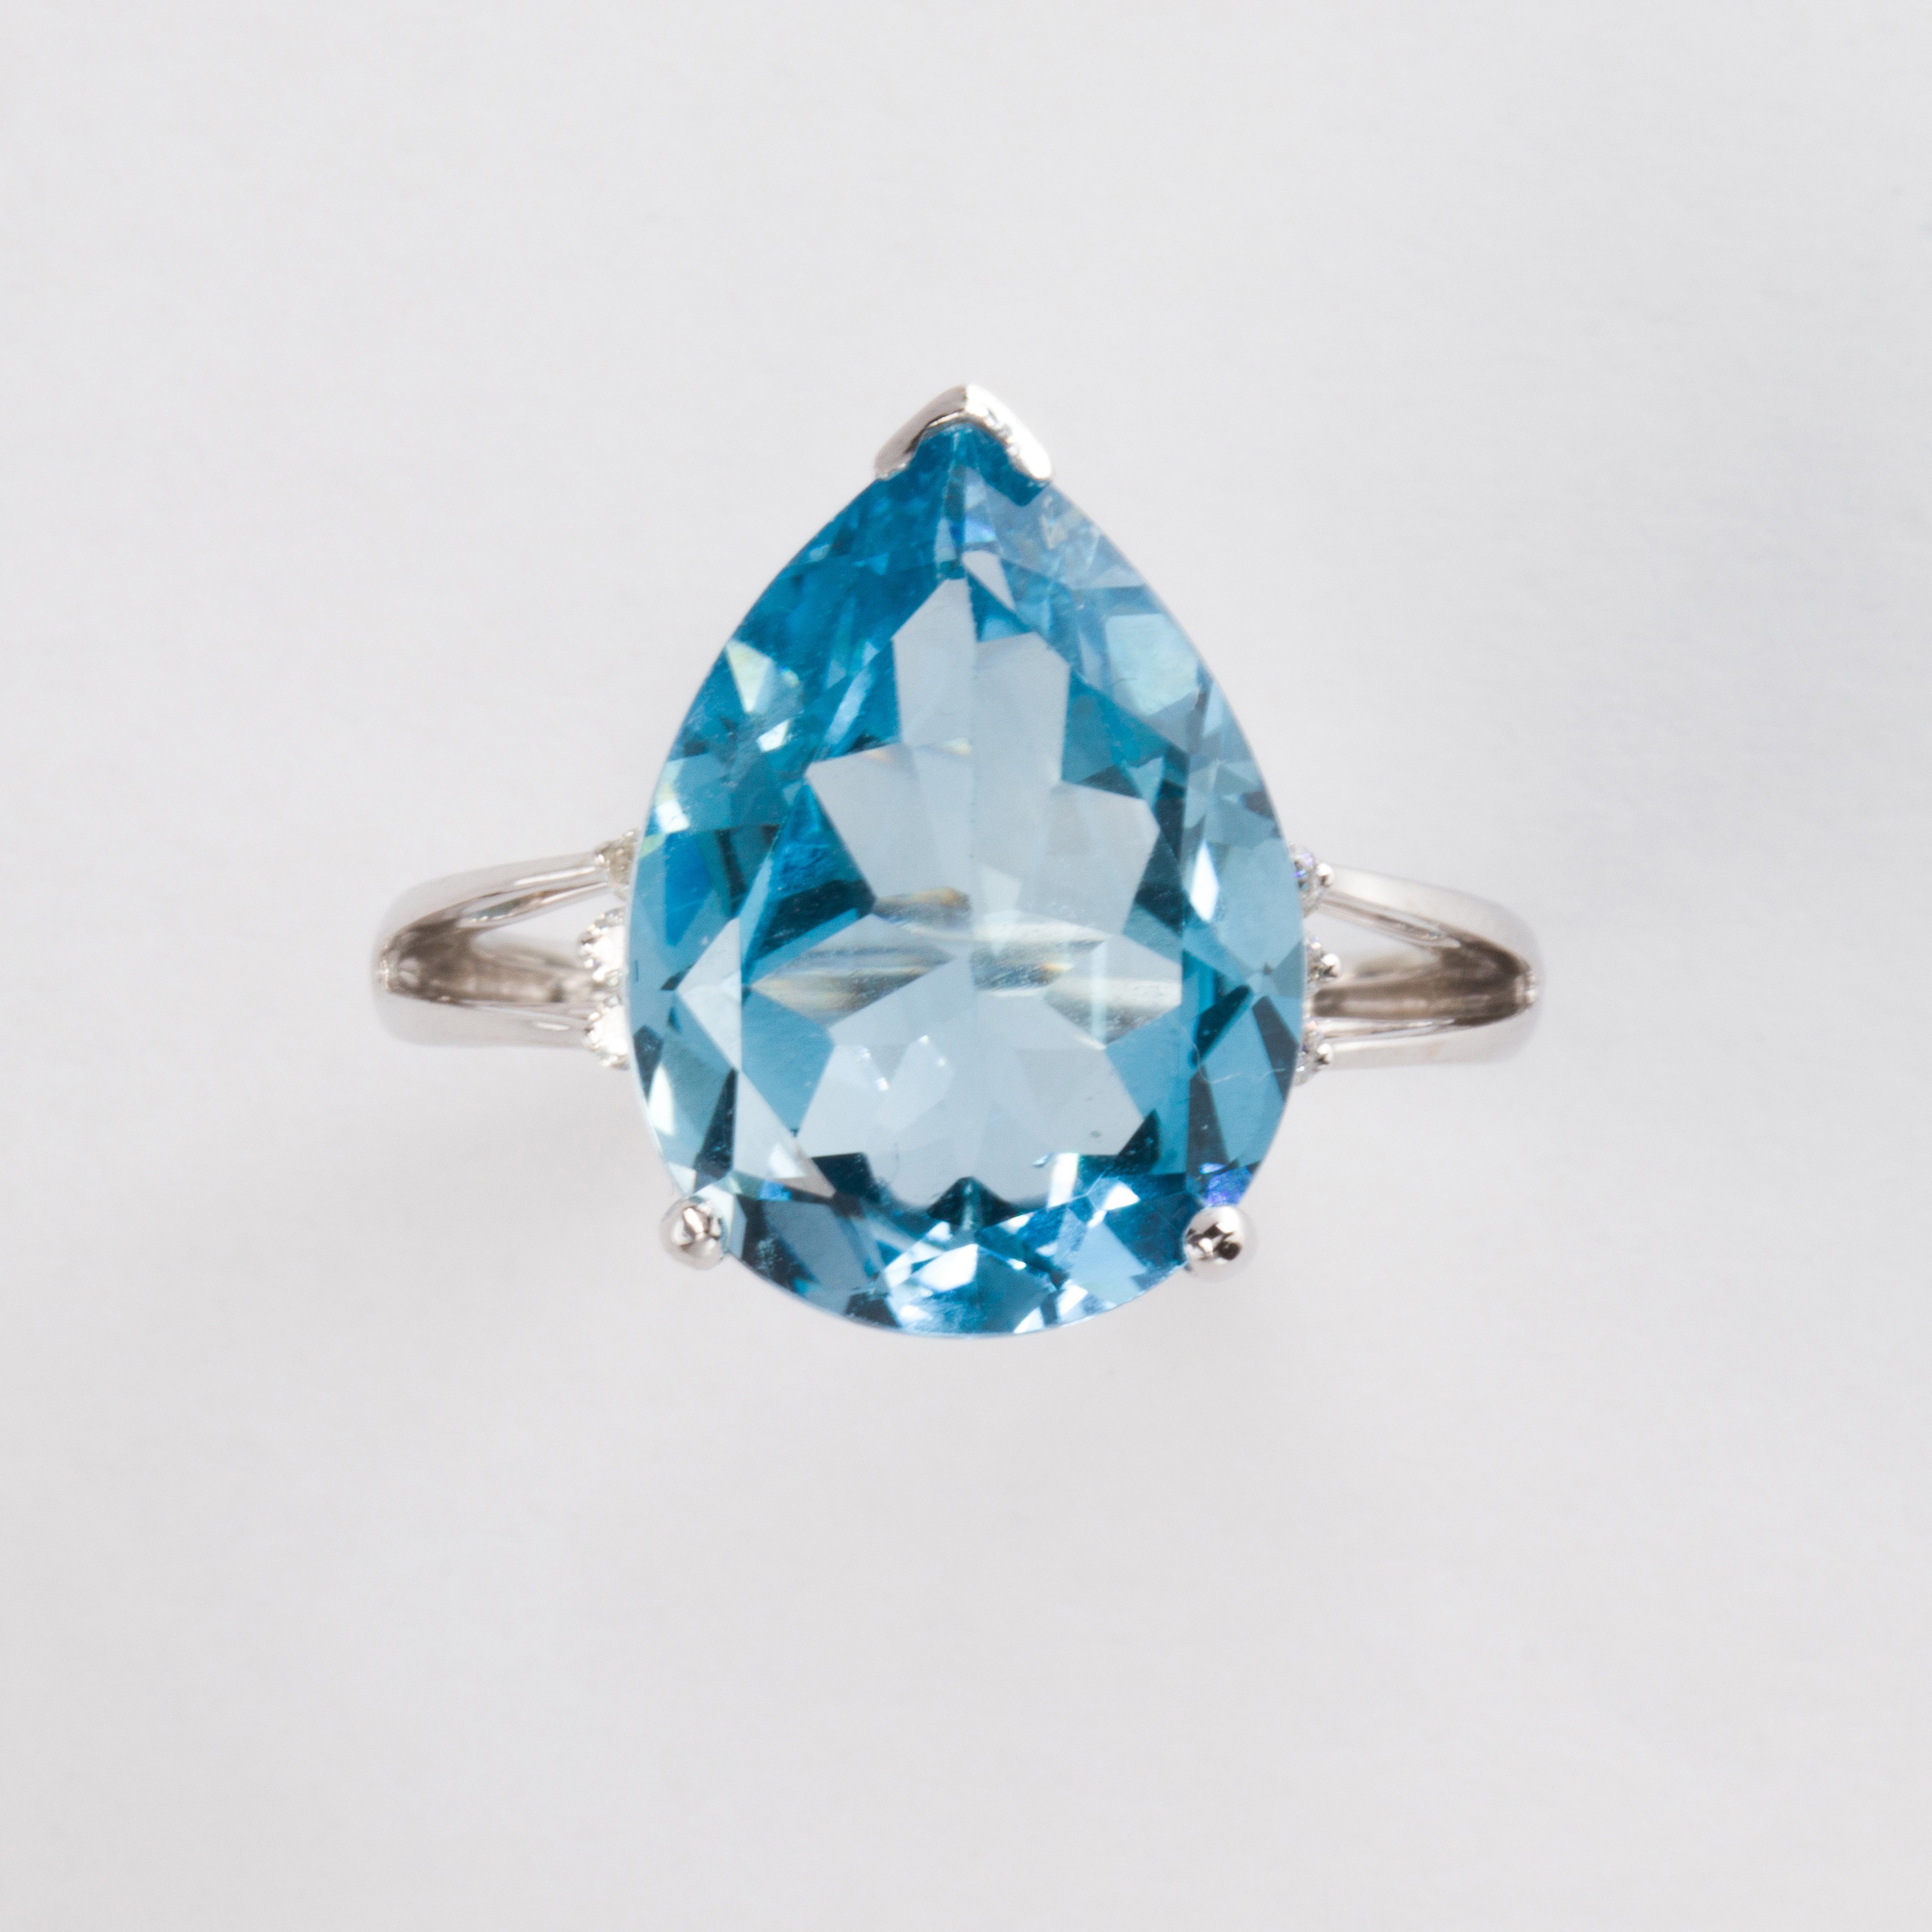 A BLUE TOPAZ DIAMOND AND FOURTEEN 3a6a44